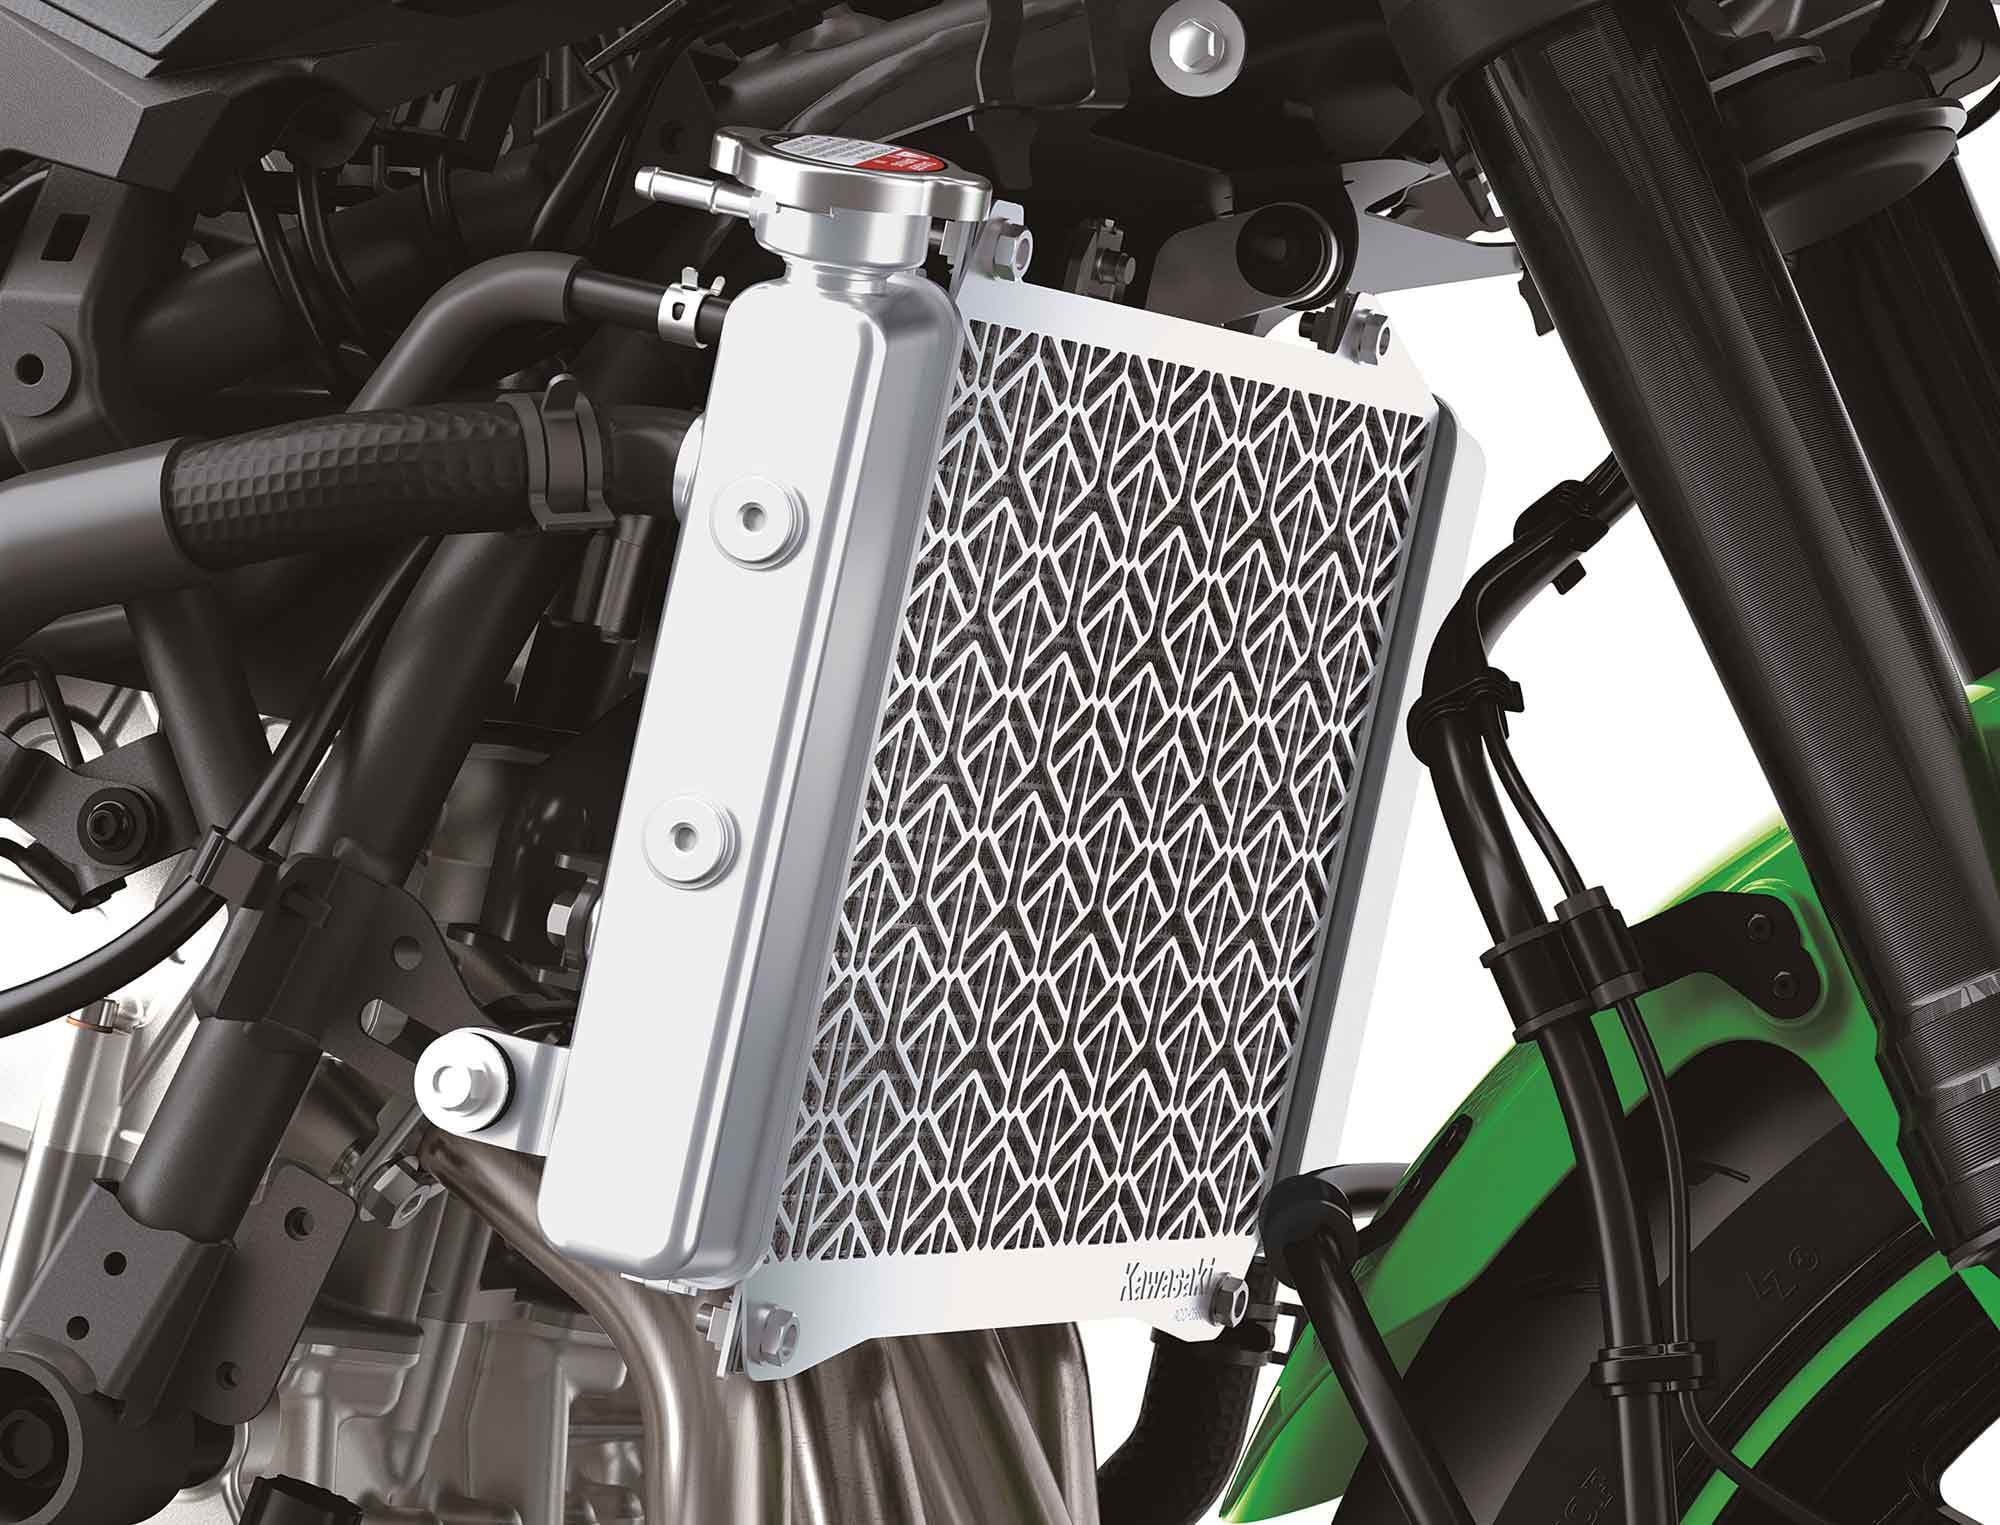 A 30-row radiator keeps the engine cool.